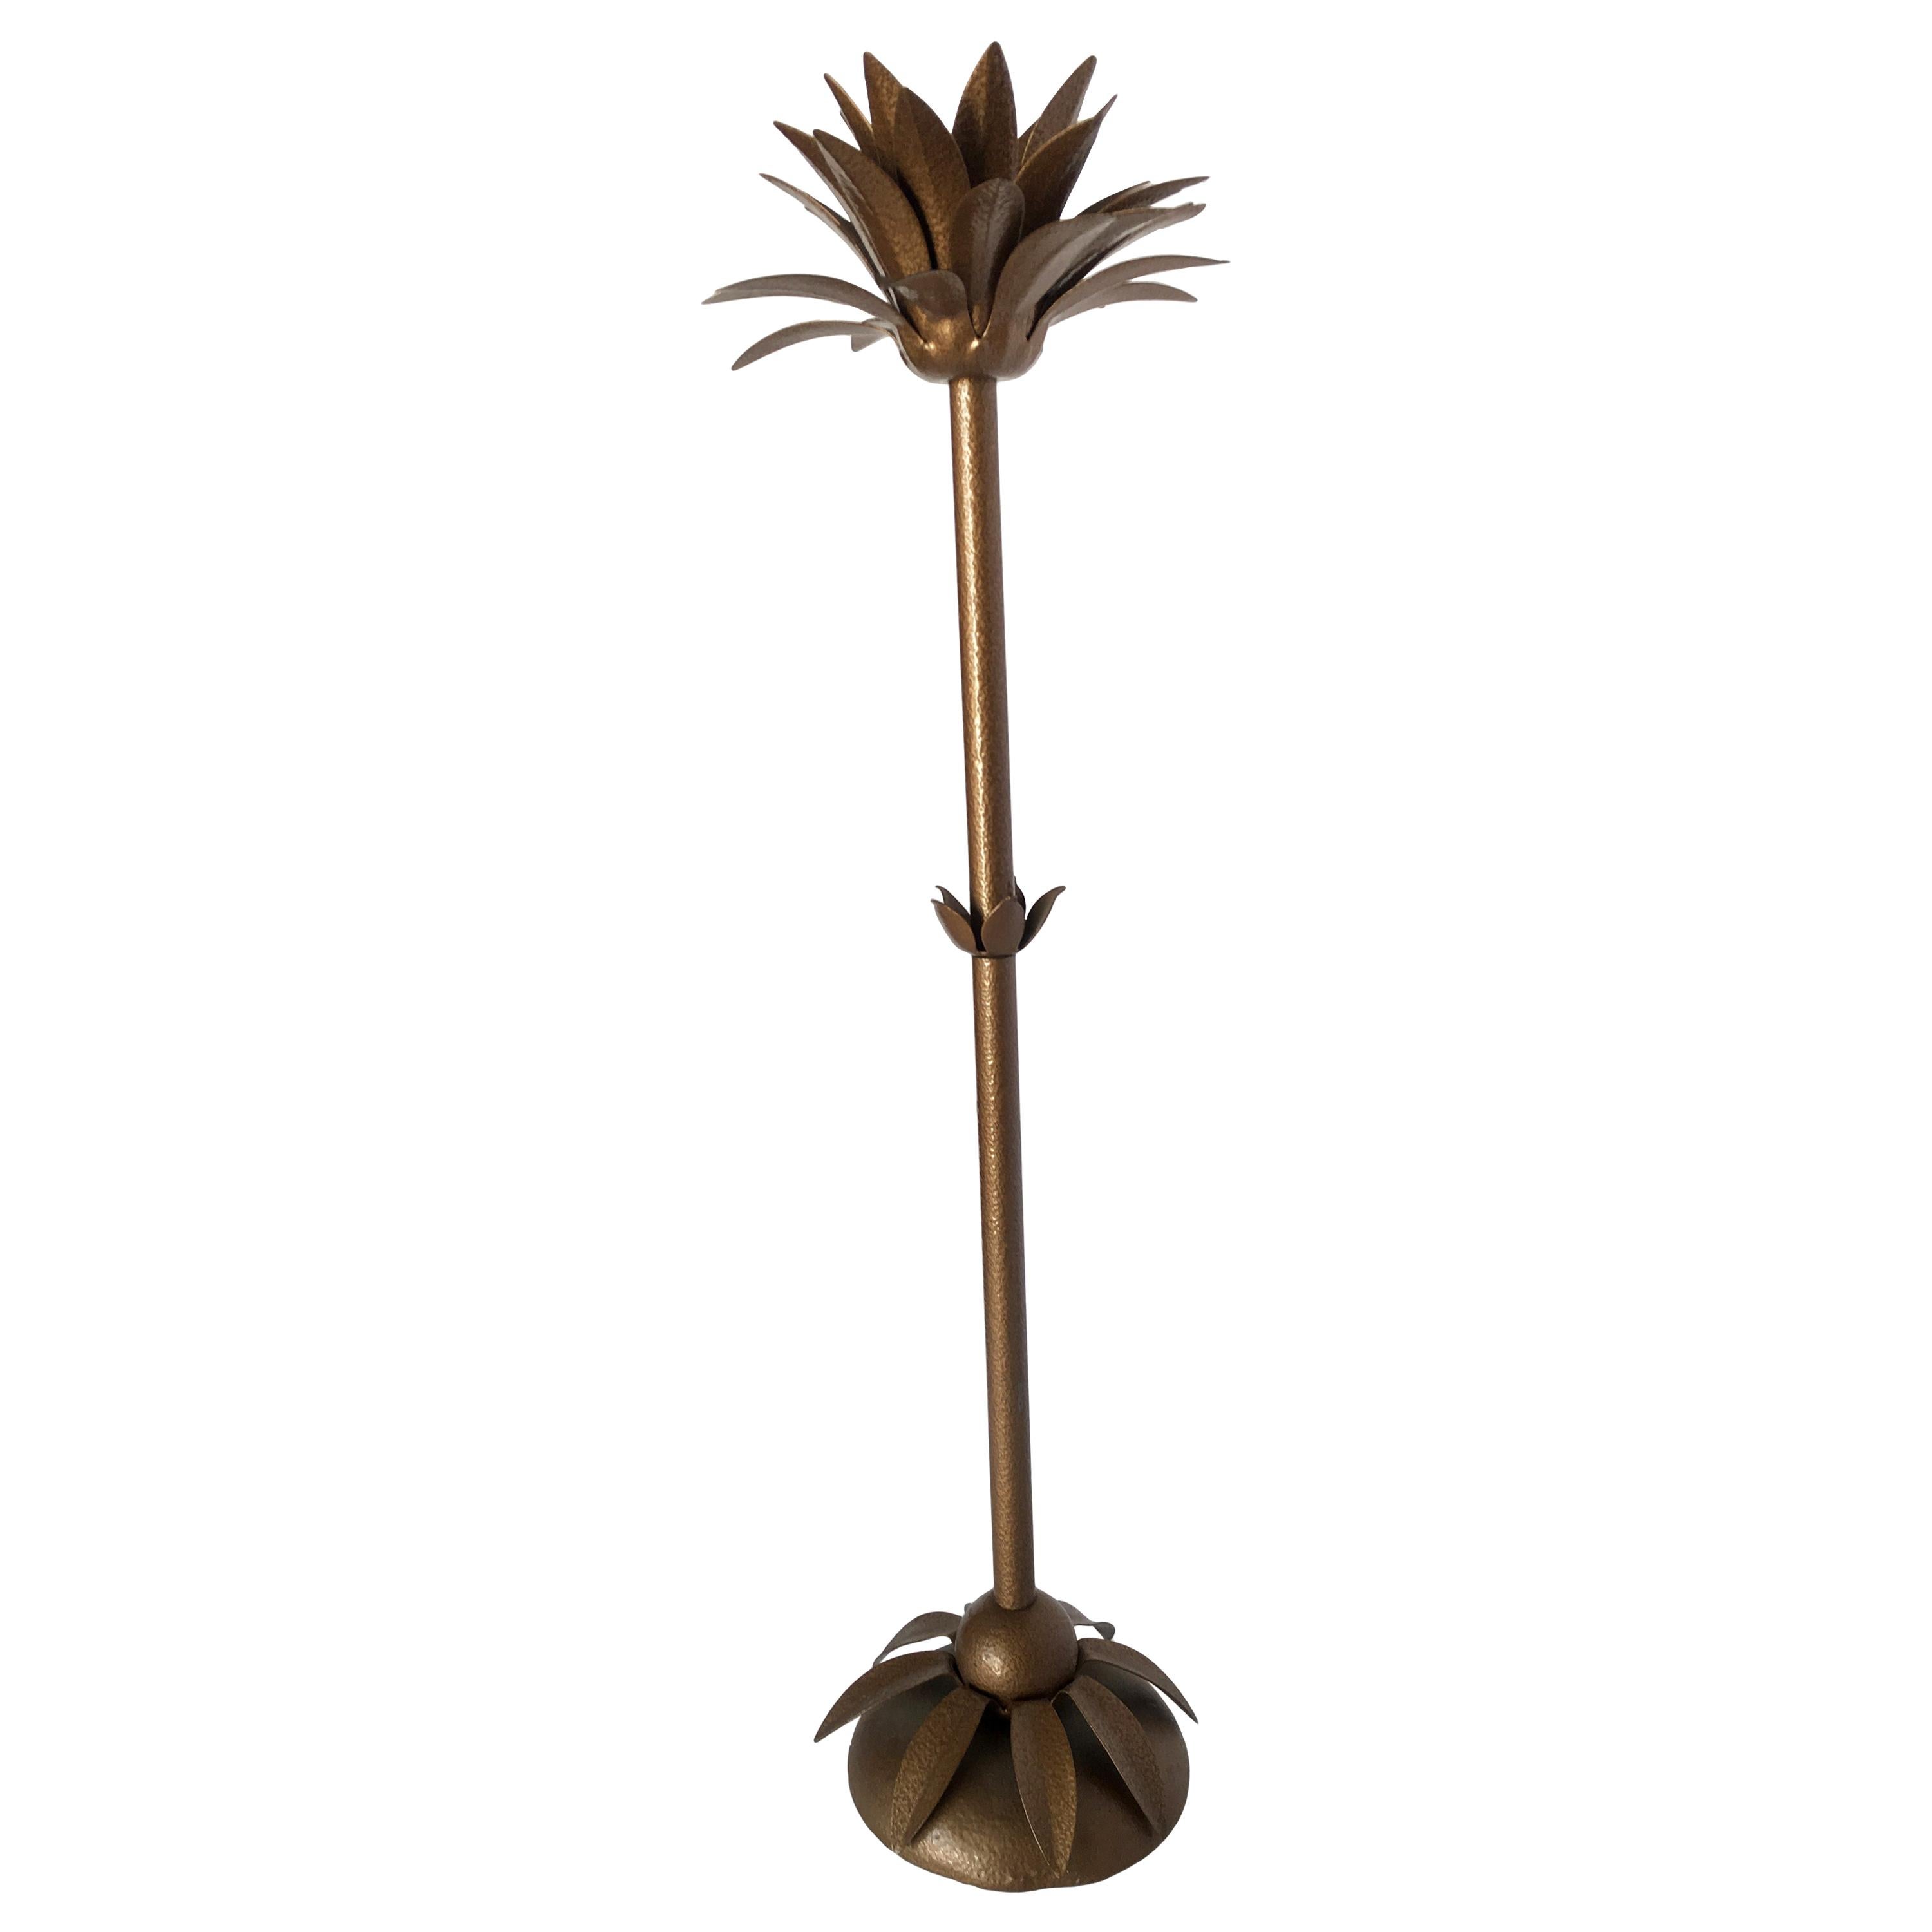 Art Deco Style Palm Leaf Candlestick Holder